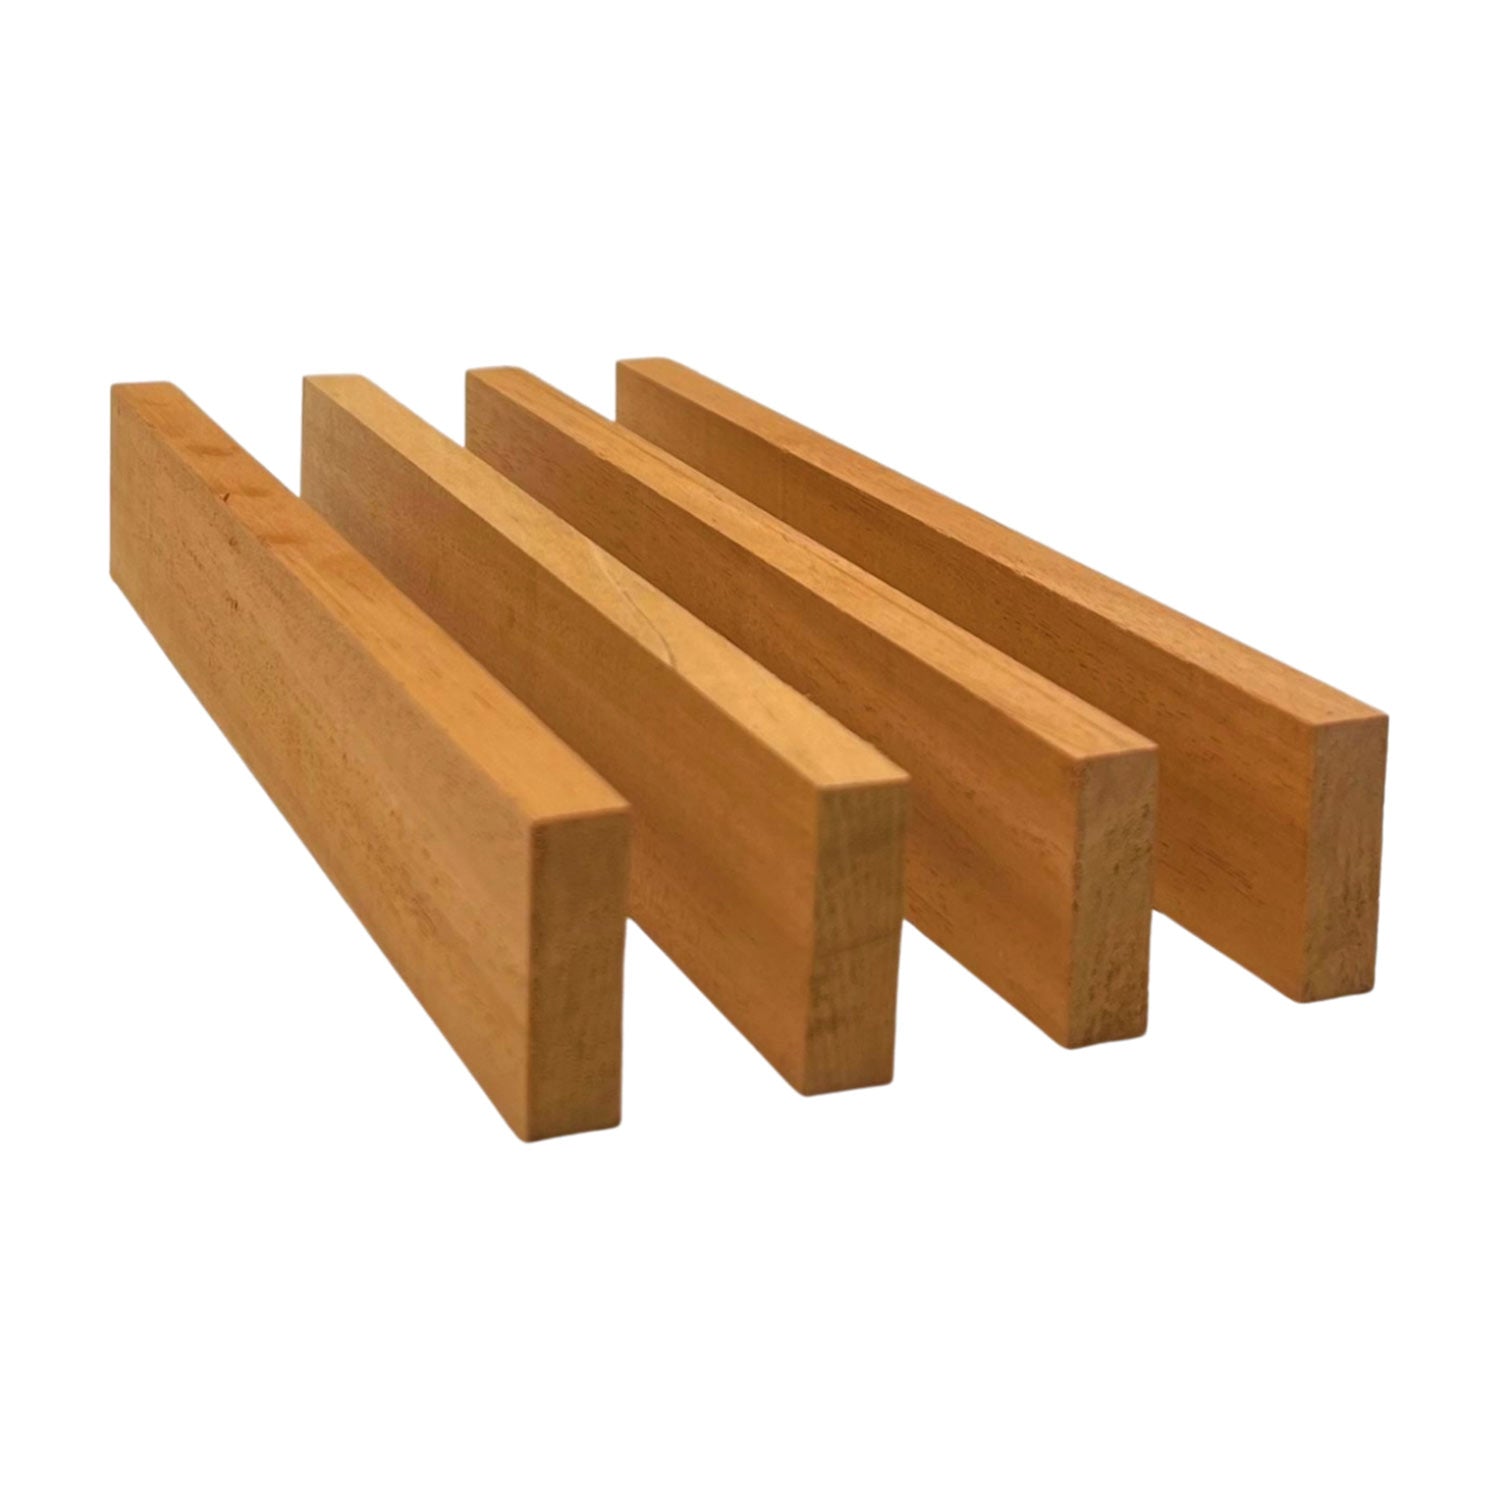 Mixed Wood Species Valet Tray Set  - 8″ x 1 1/4″ x 3/8″ (4 pieces)